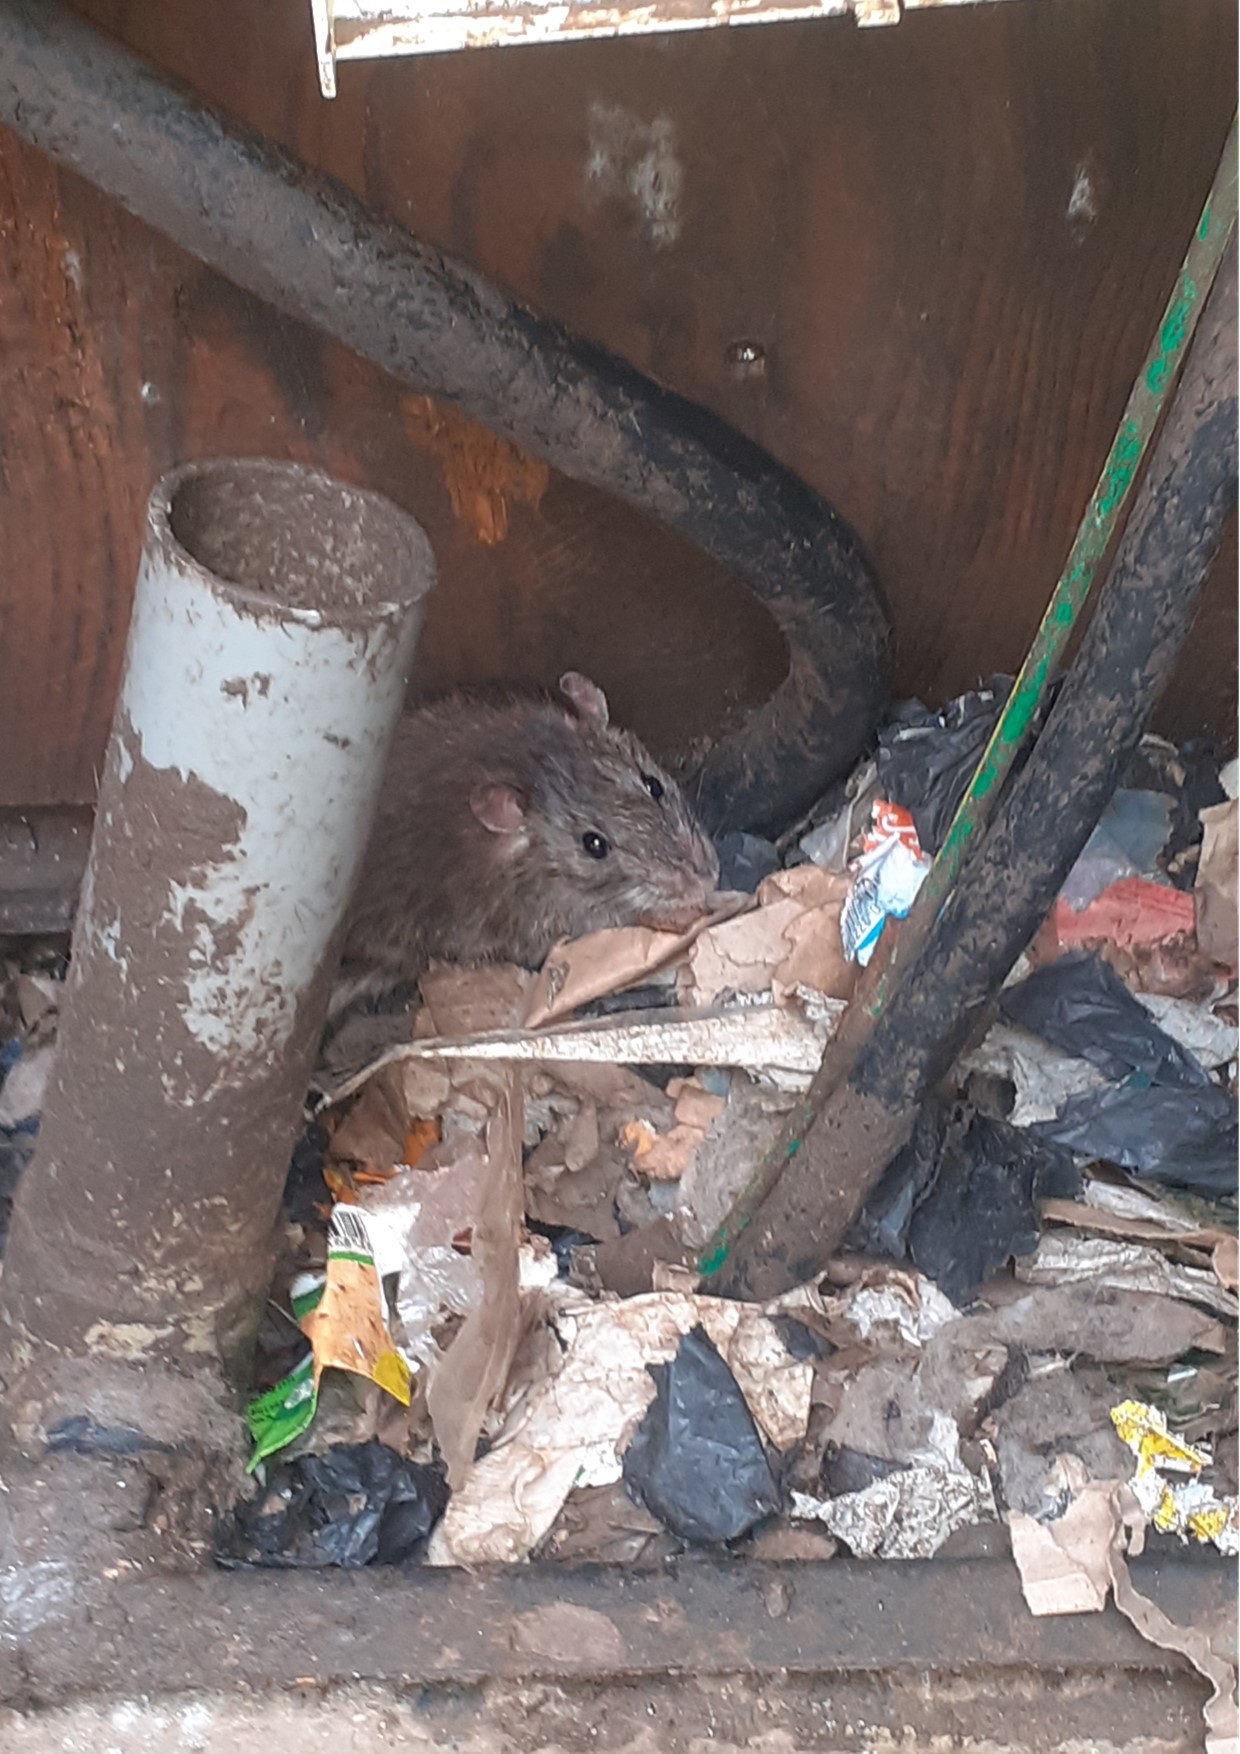 Rat in hiding